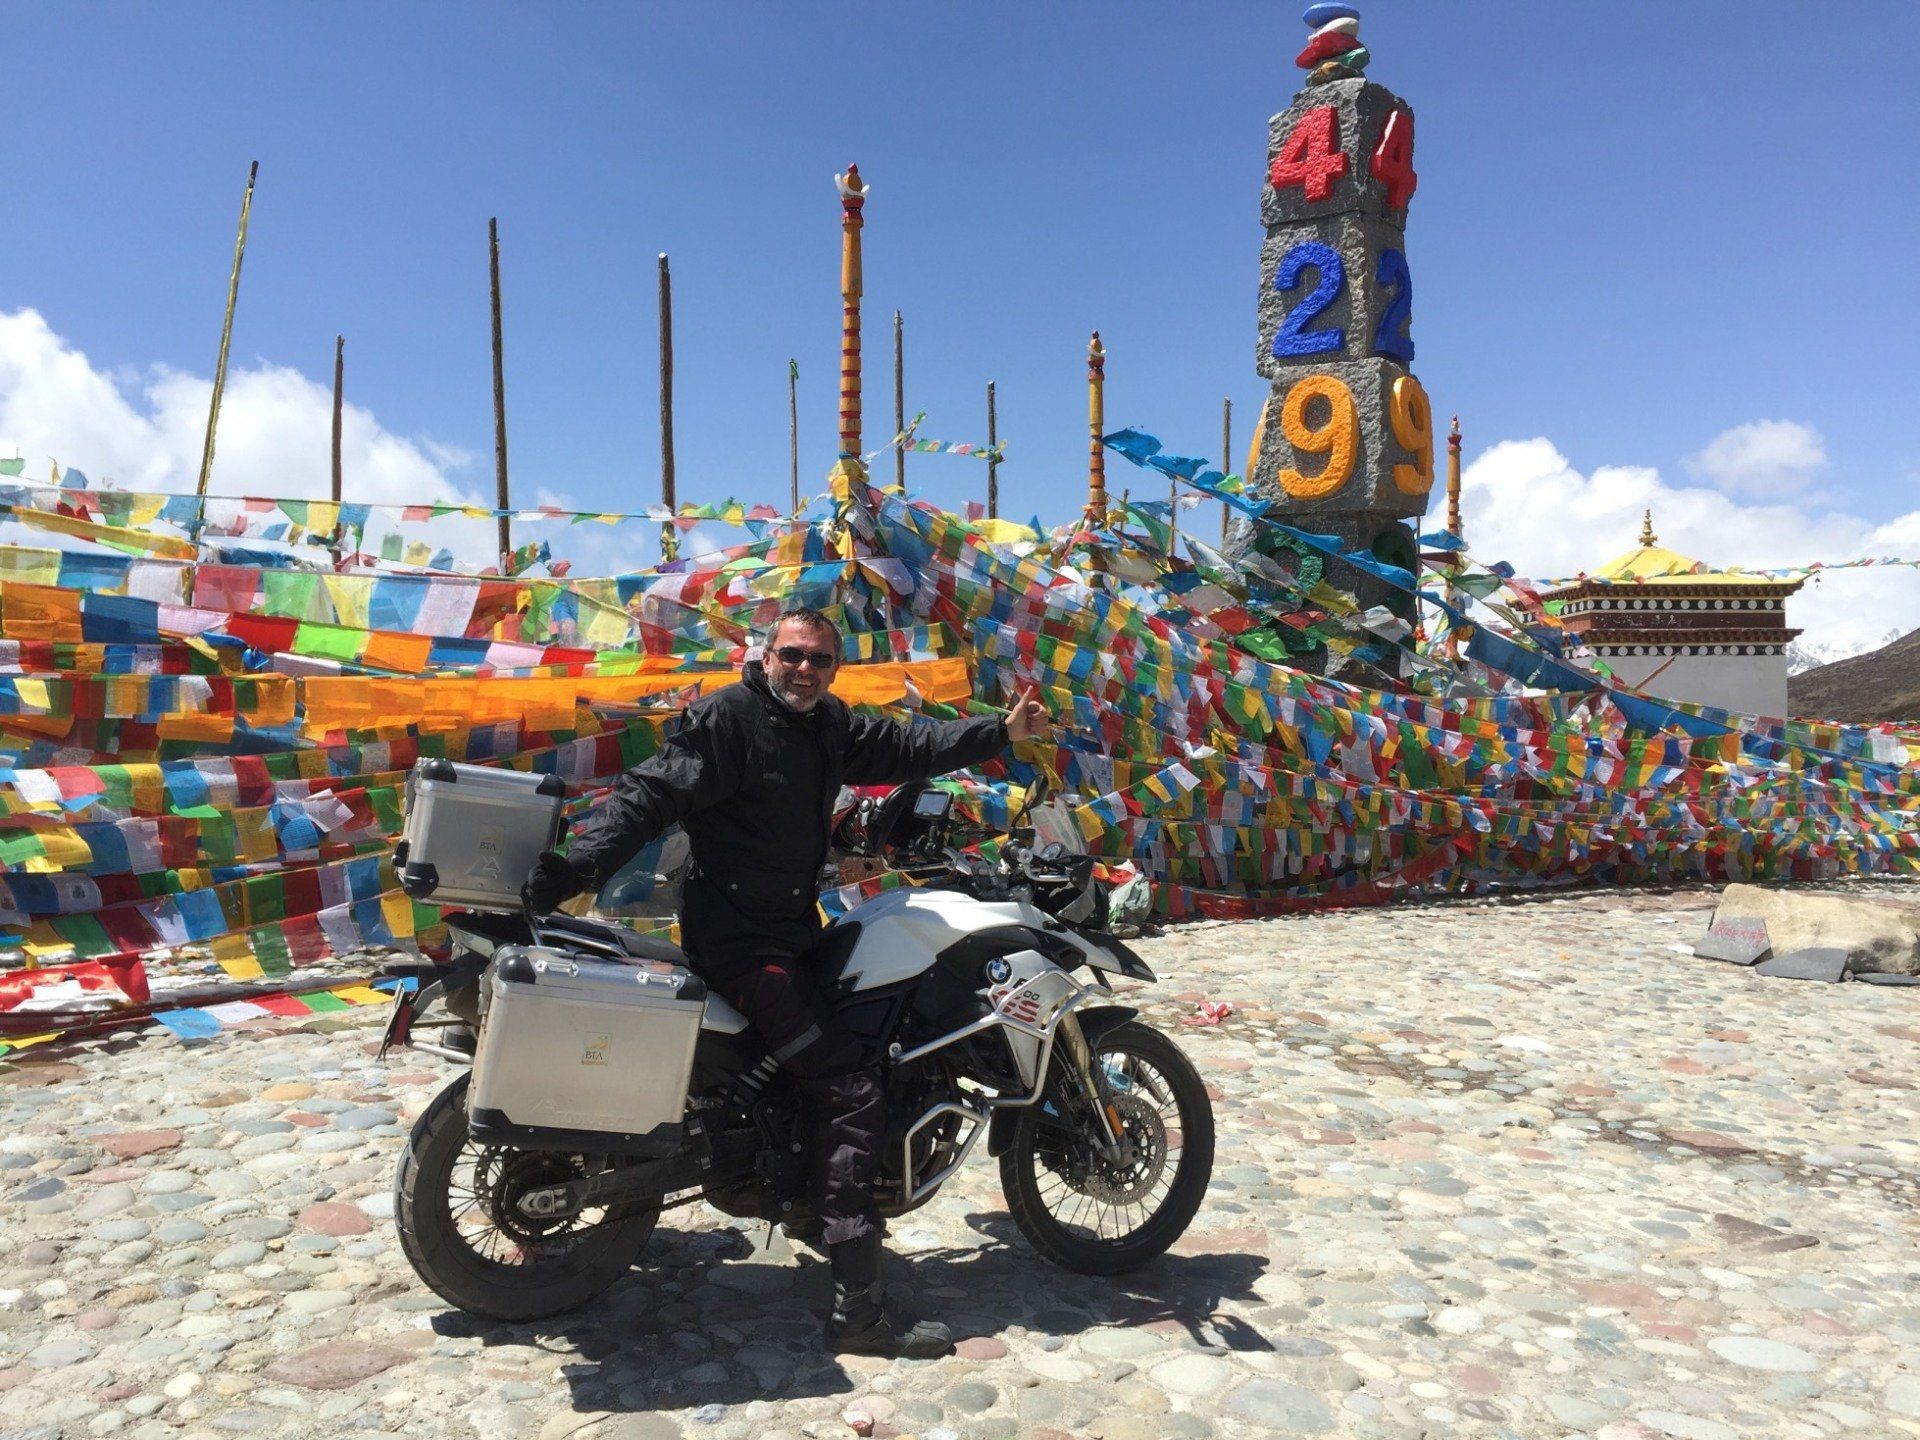 motorcycle tours china